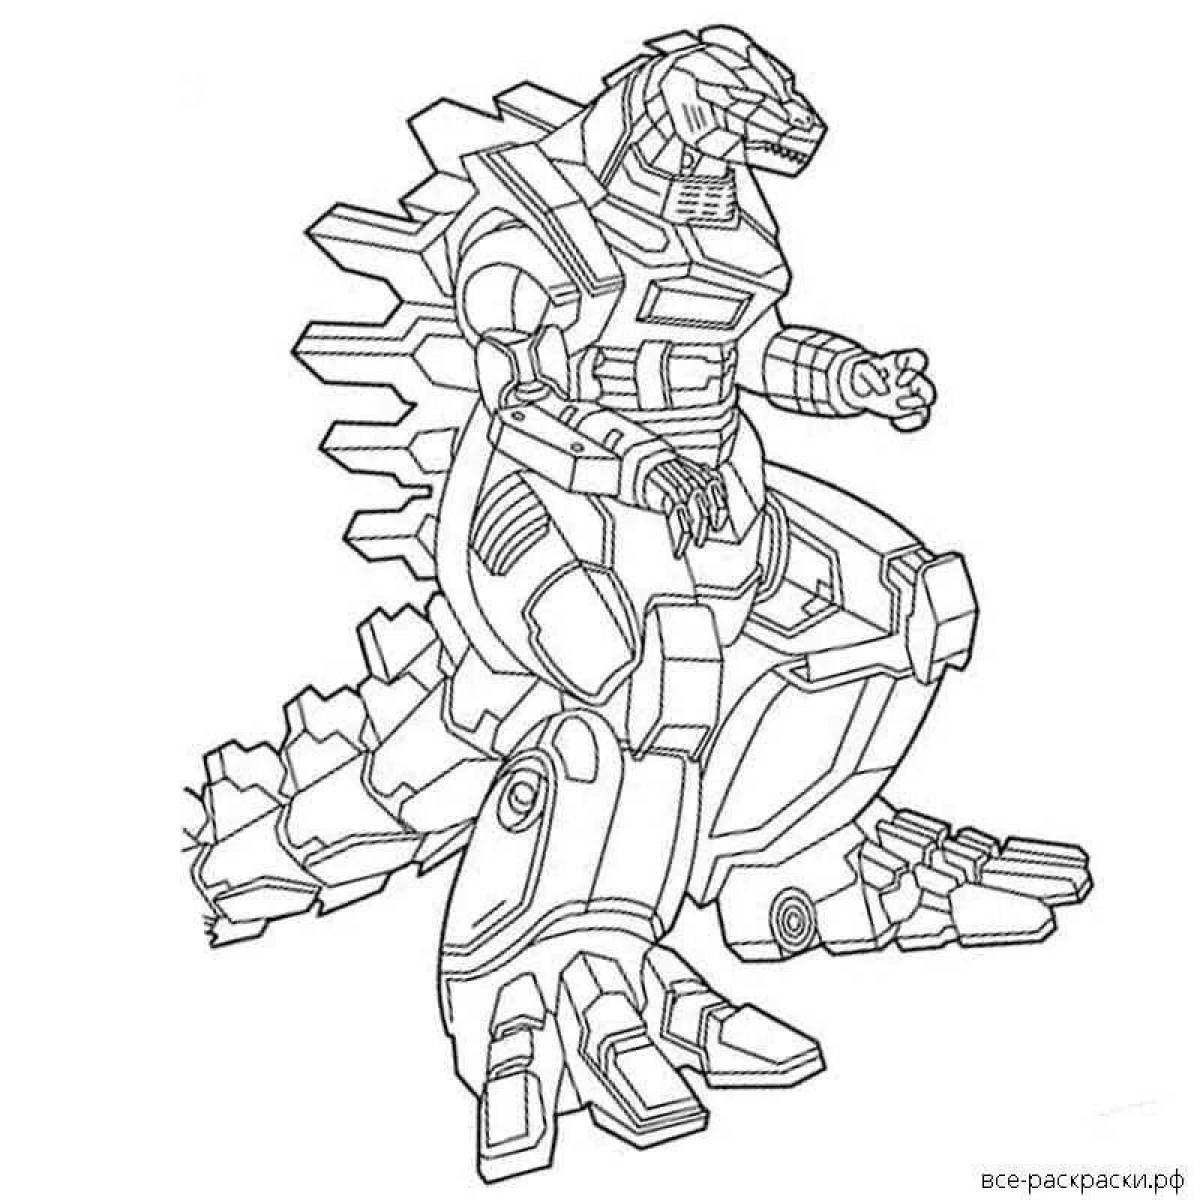 Godzilla dynamic robot coloring page